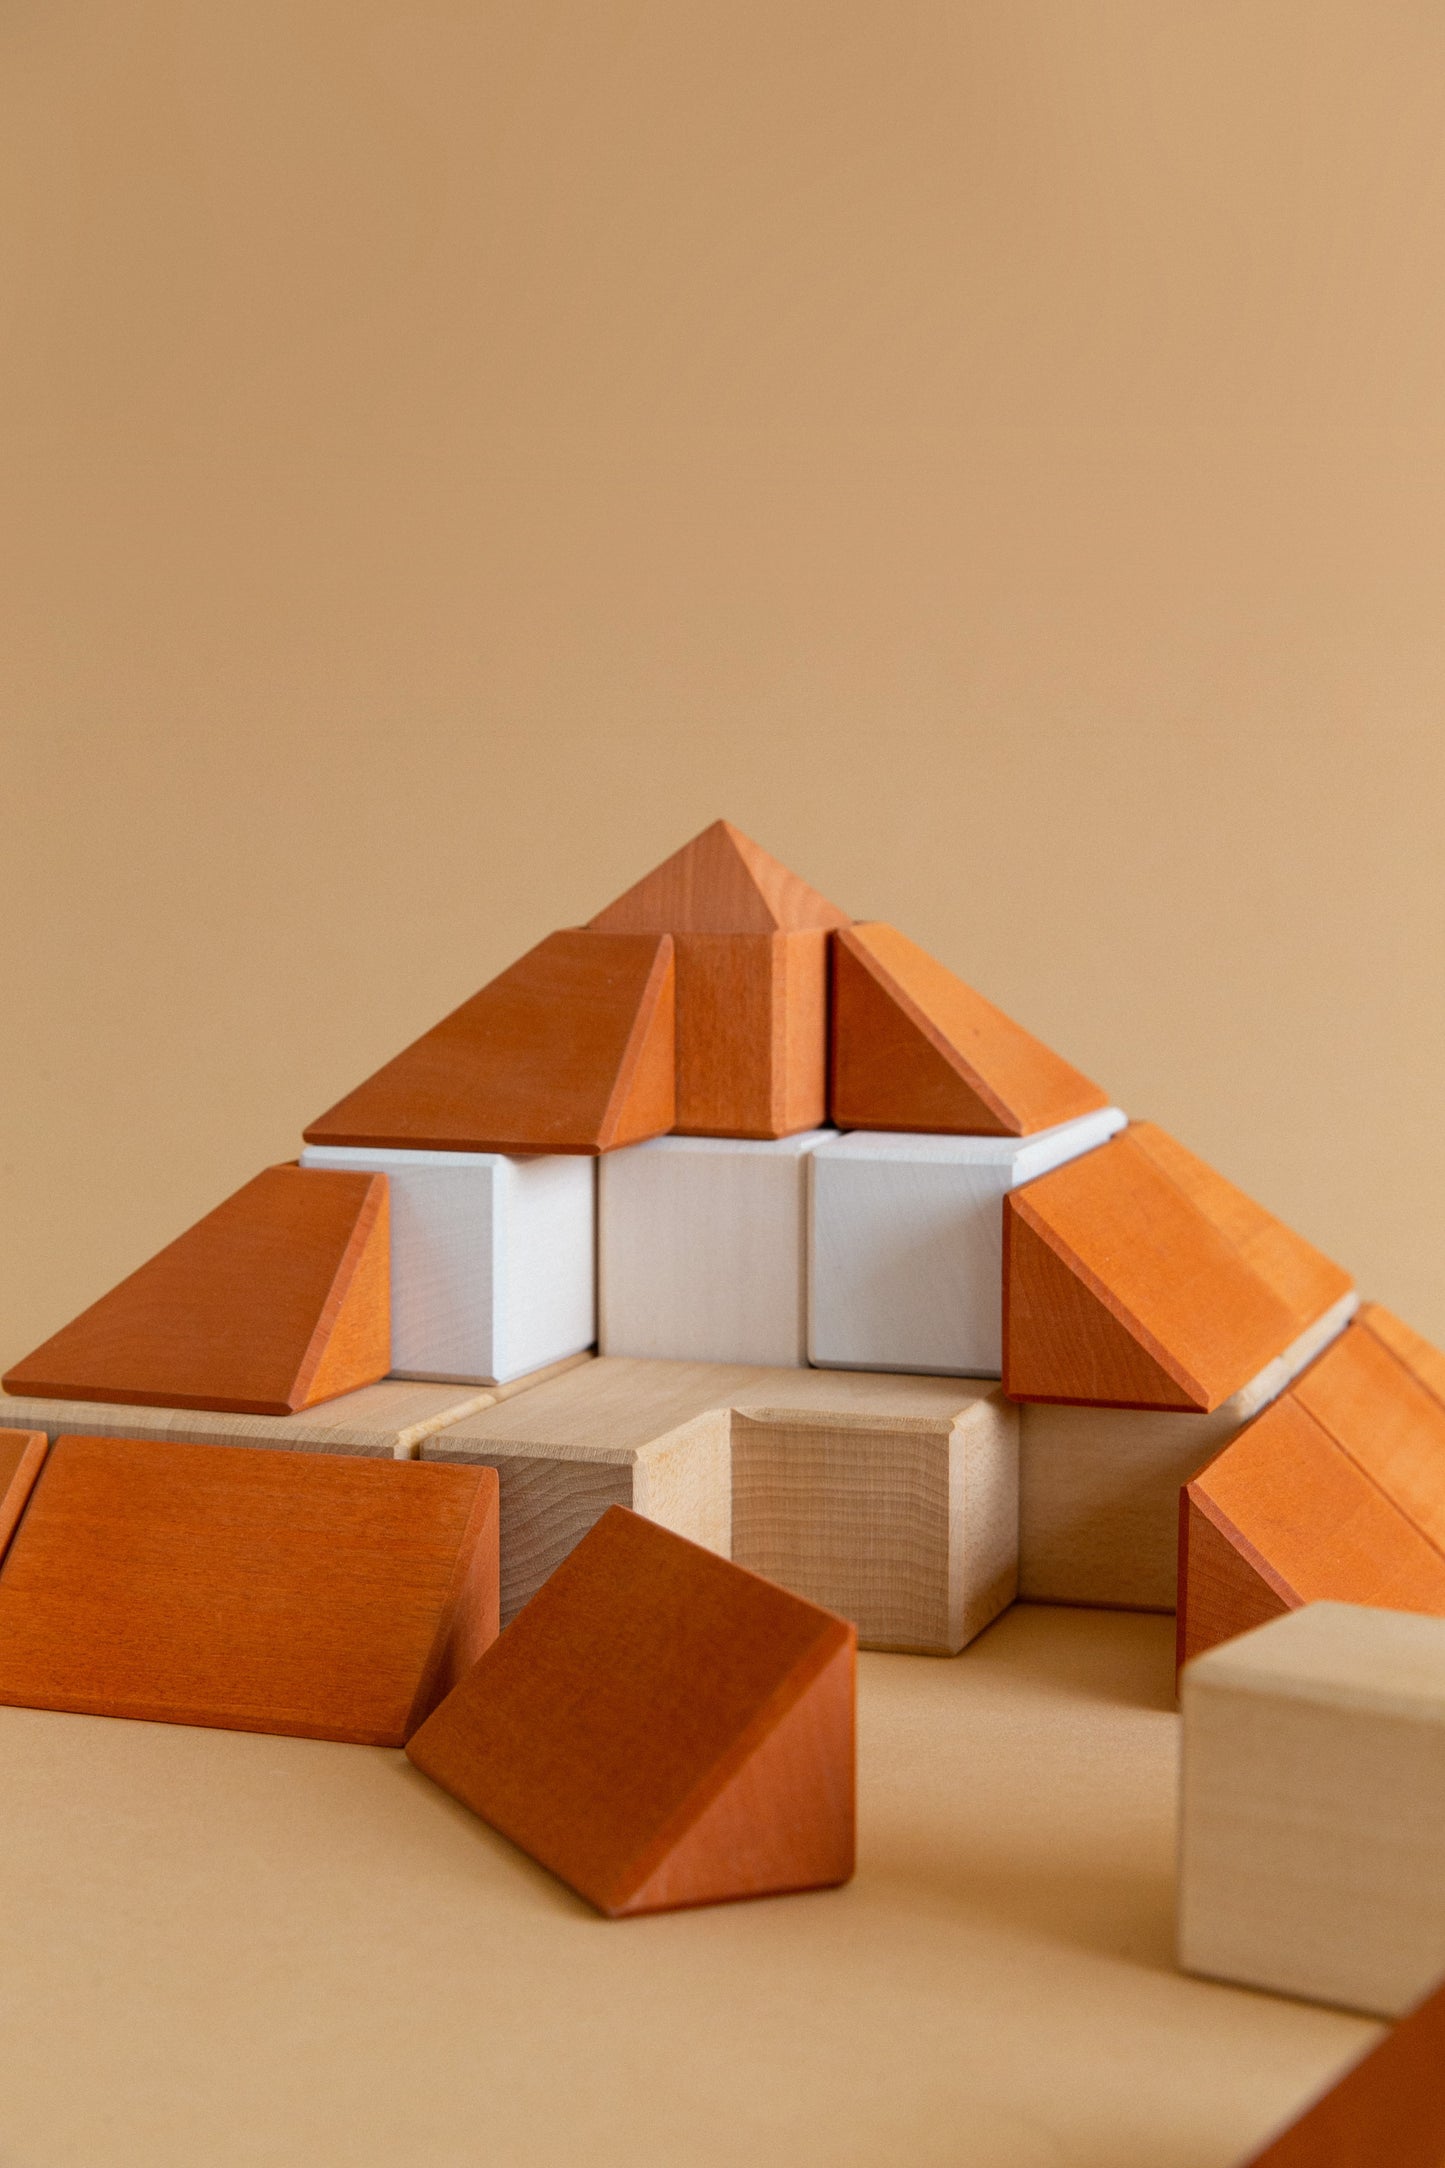 Ensemble de blocs pyramidaux par Avdar